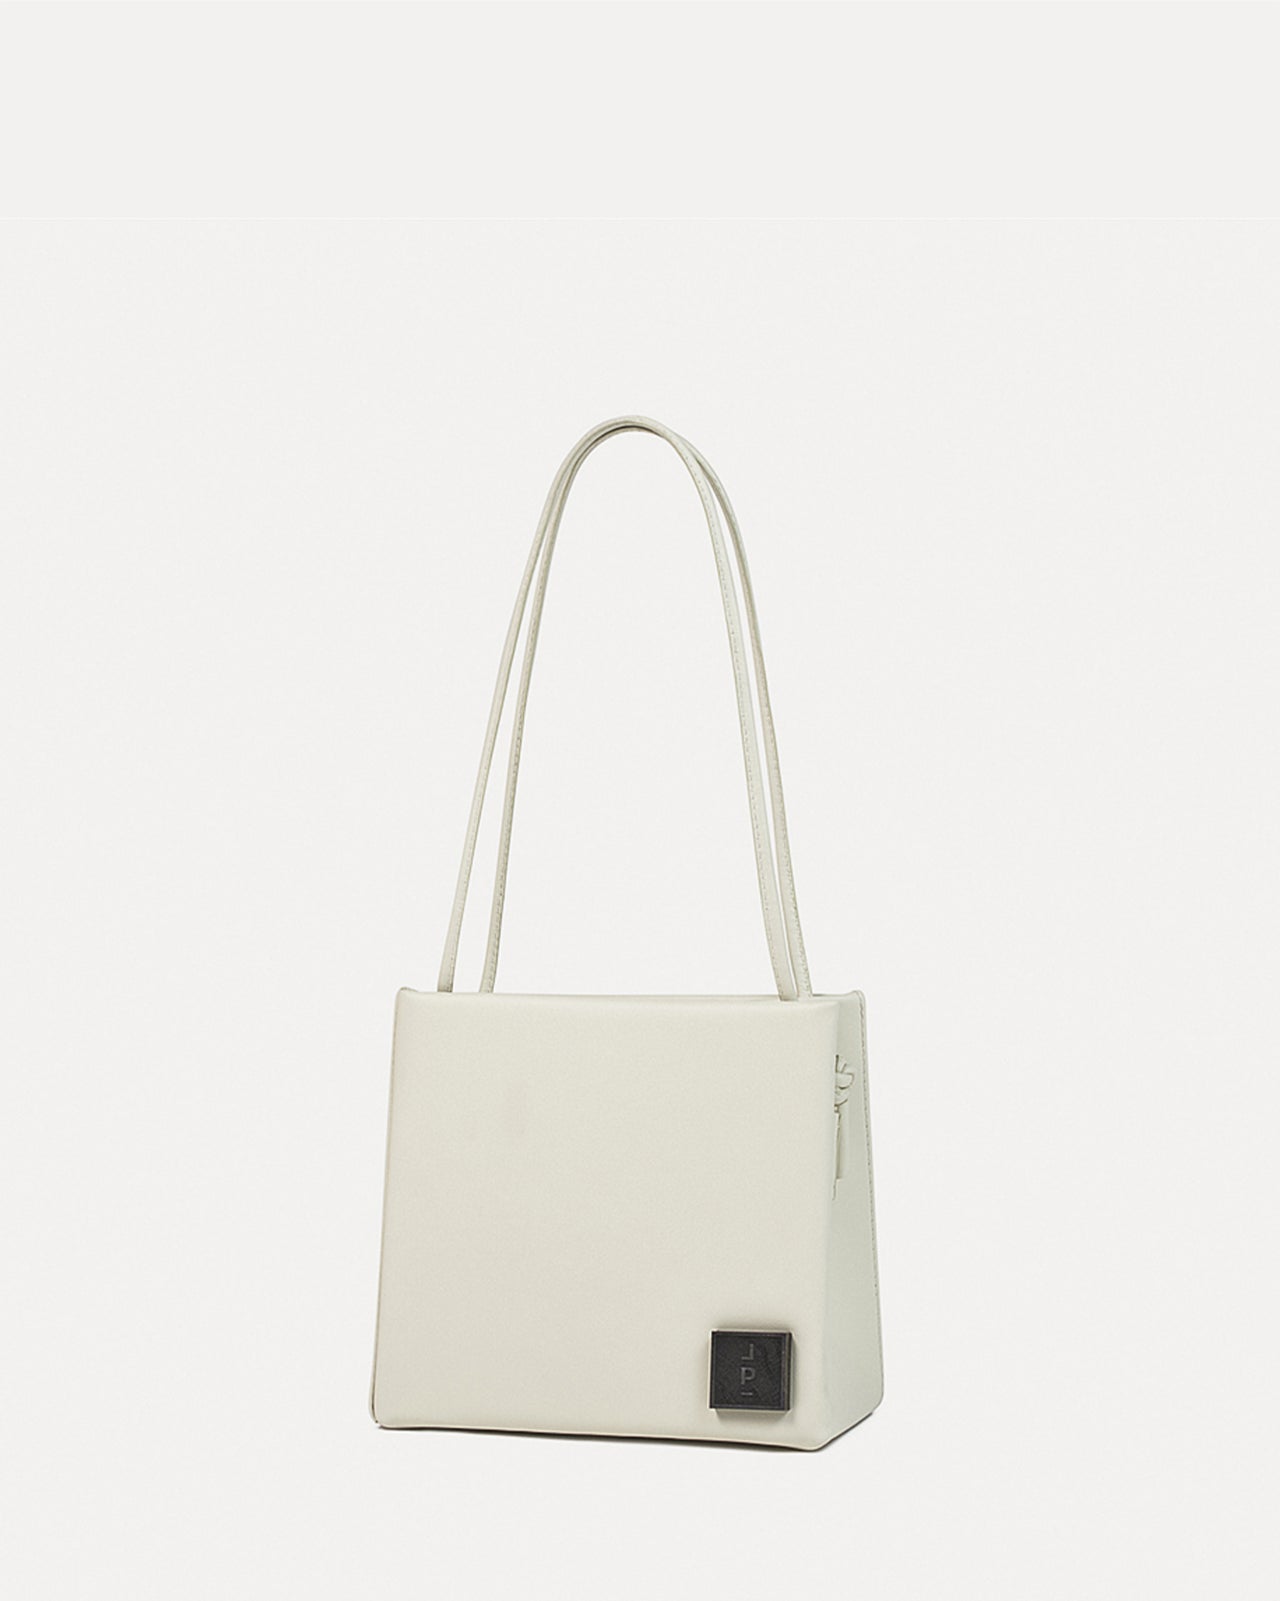 Square Bag in Off-white